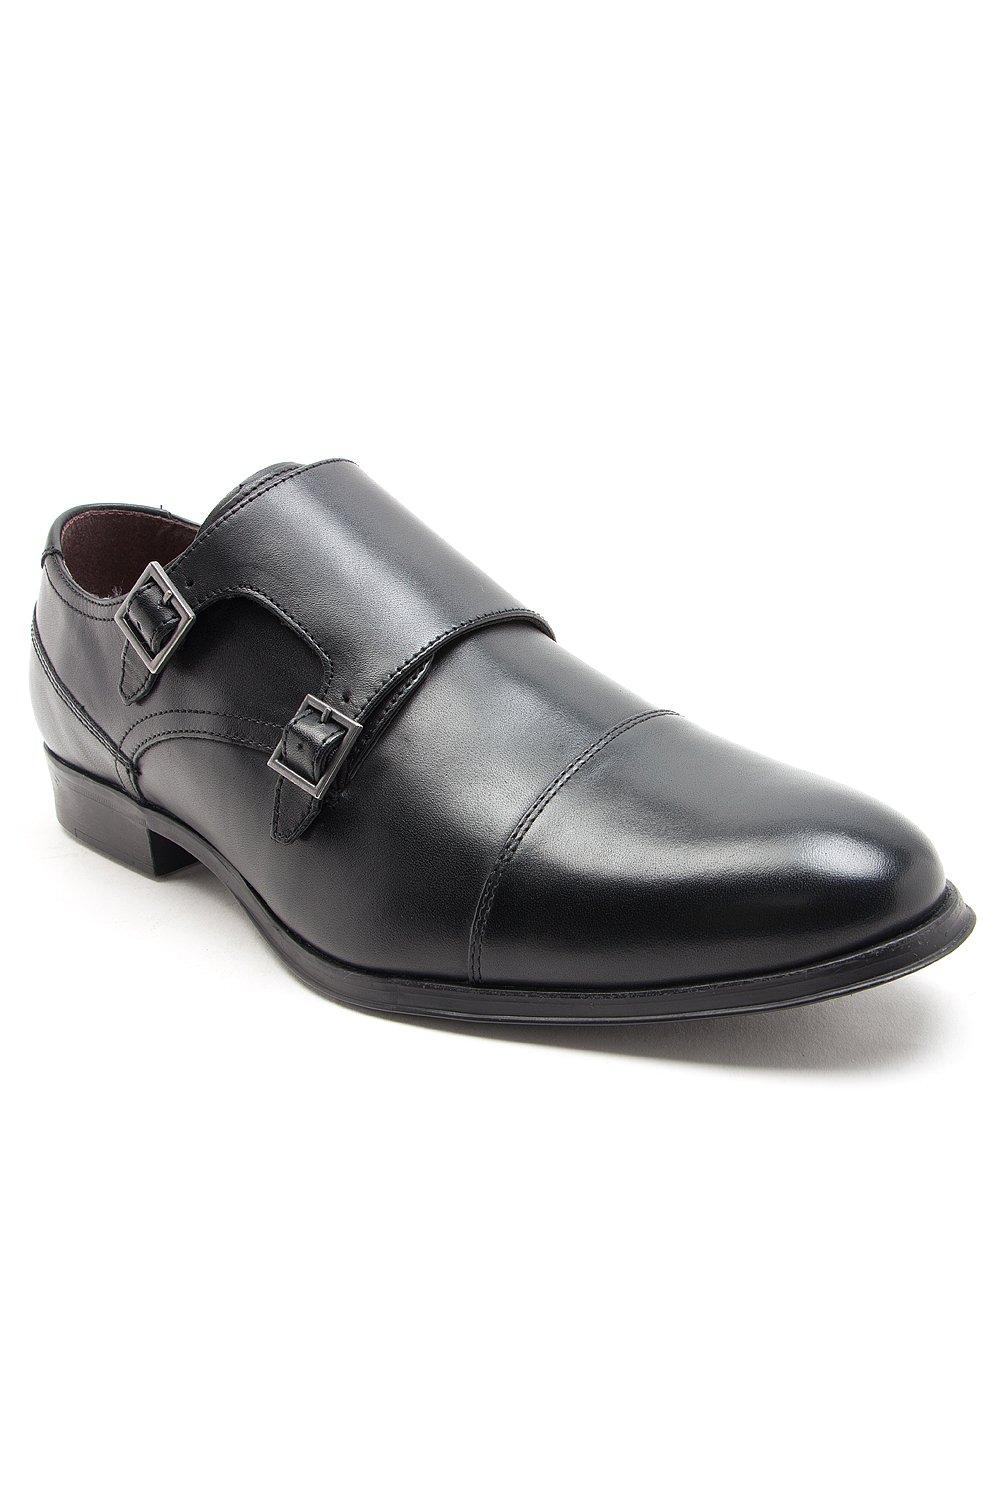 Shoes | 'Boycie' Double Monk Strap Formal Shoes | Thomas Crick